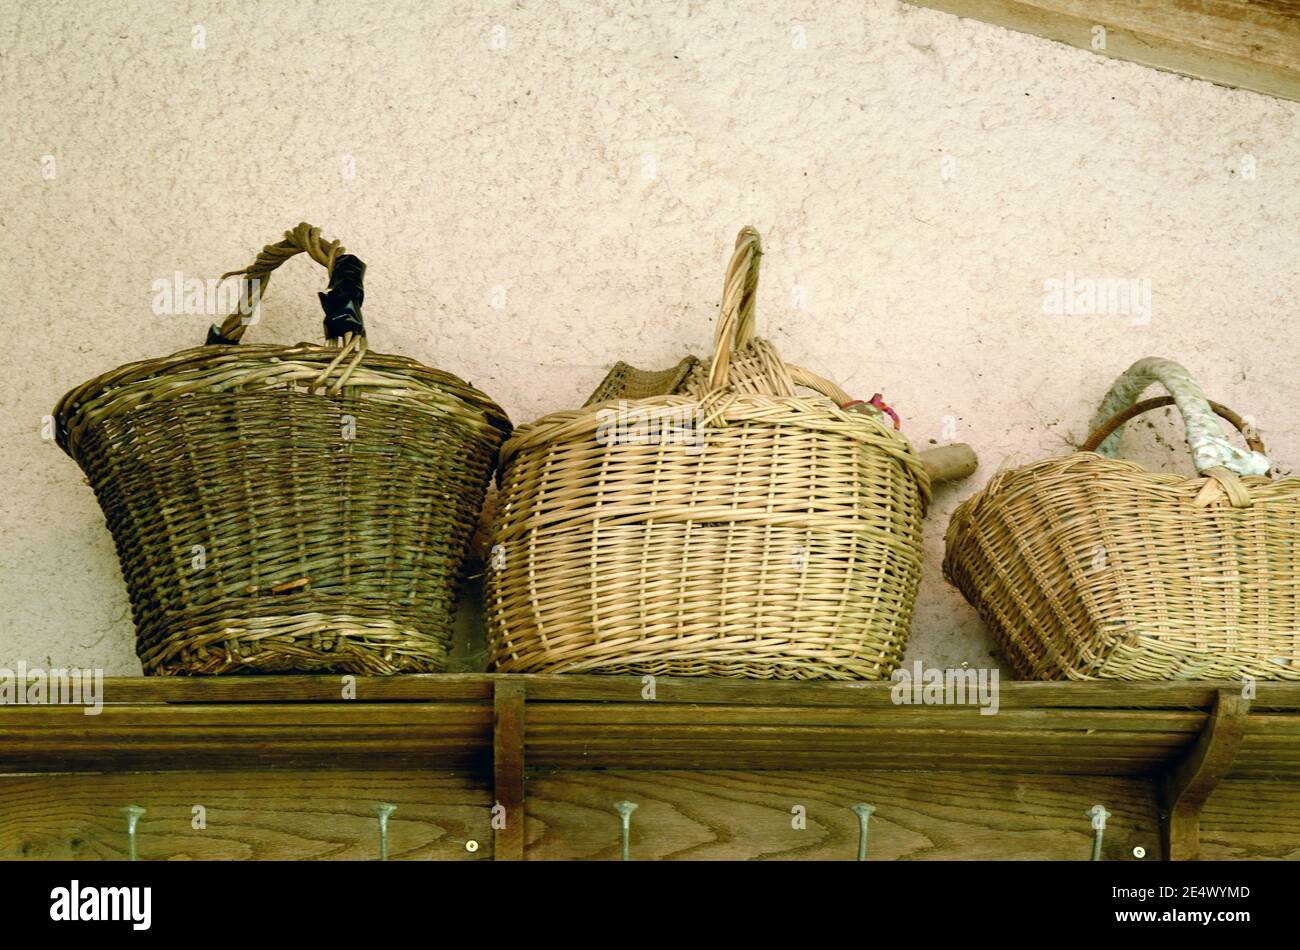 Display of Old Wicket Baskets or Wickerwork Baskets on Wooden Shelf Stock Photo